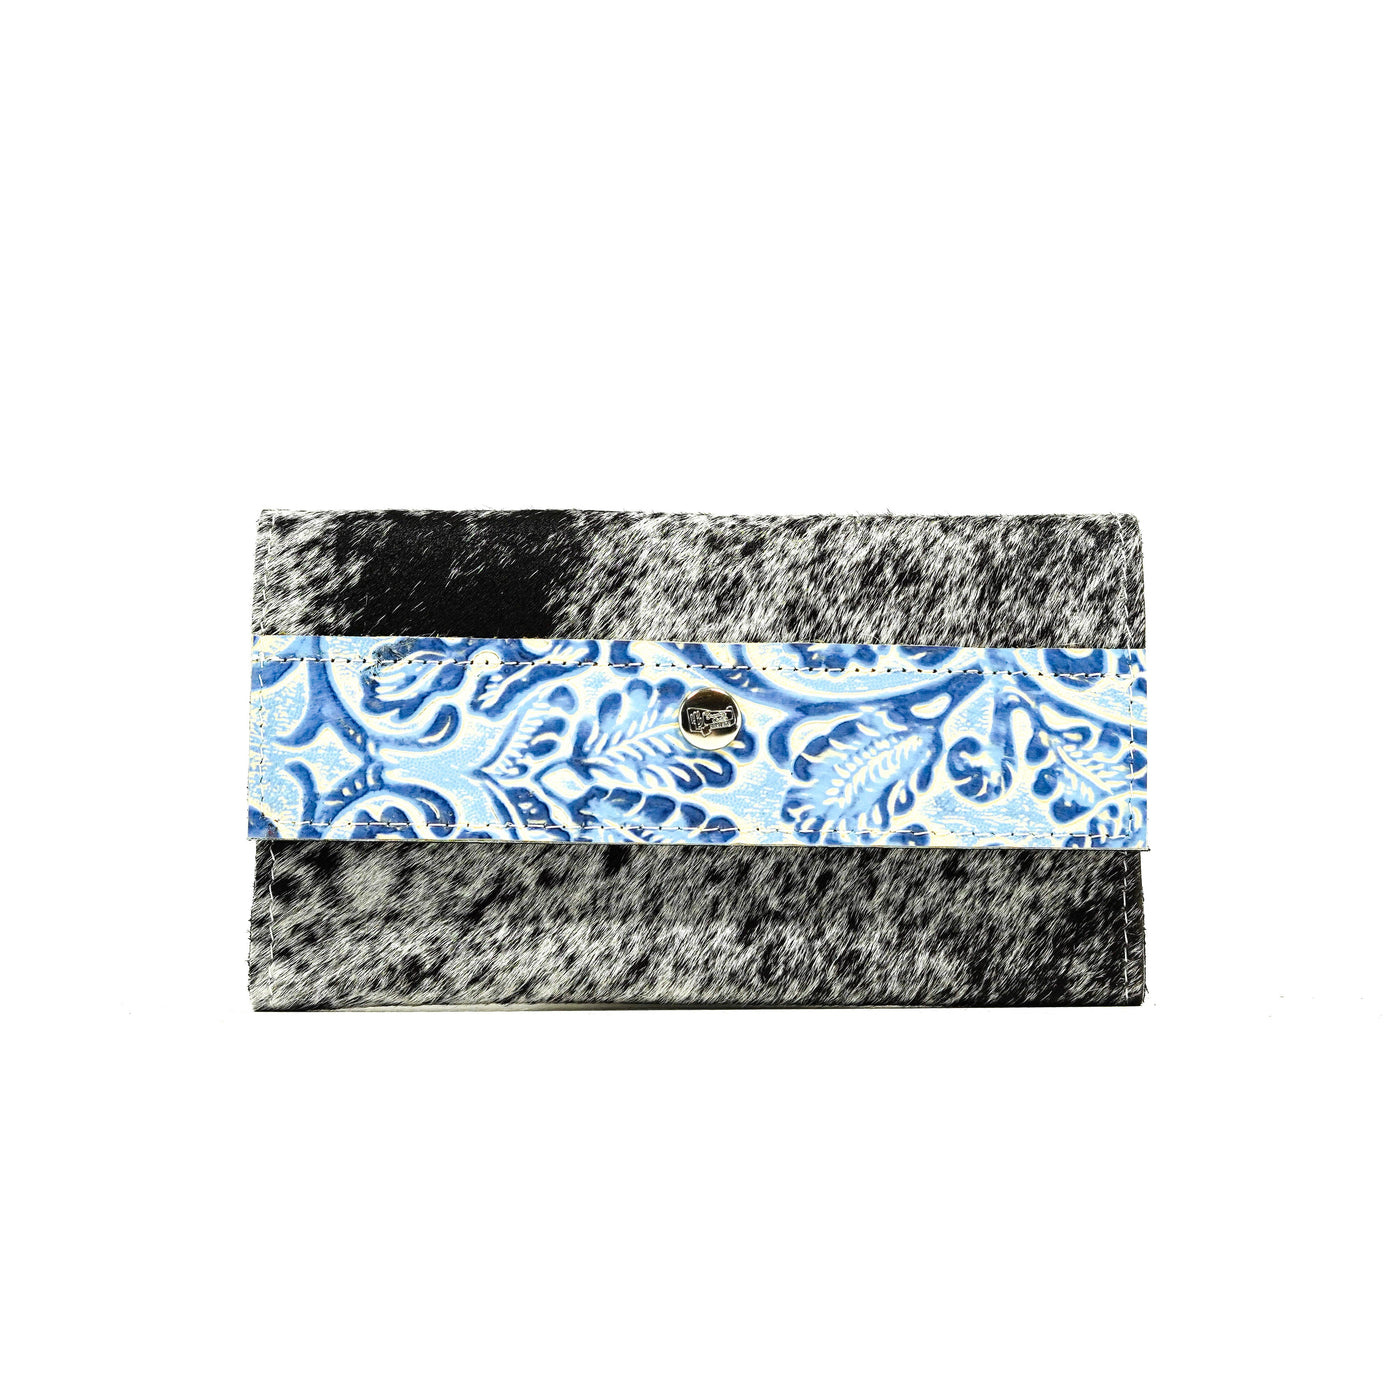 Kacey Wallet - Salt & Pepper w/ Galaxy Tool-Kacey Wallet-Western-Cowhide-Bags-Handmade-Products-Gifts-Dancing Cactus Designs